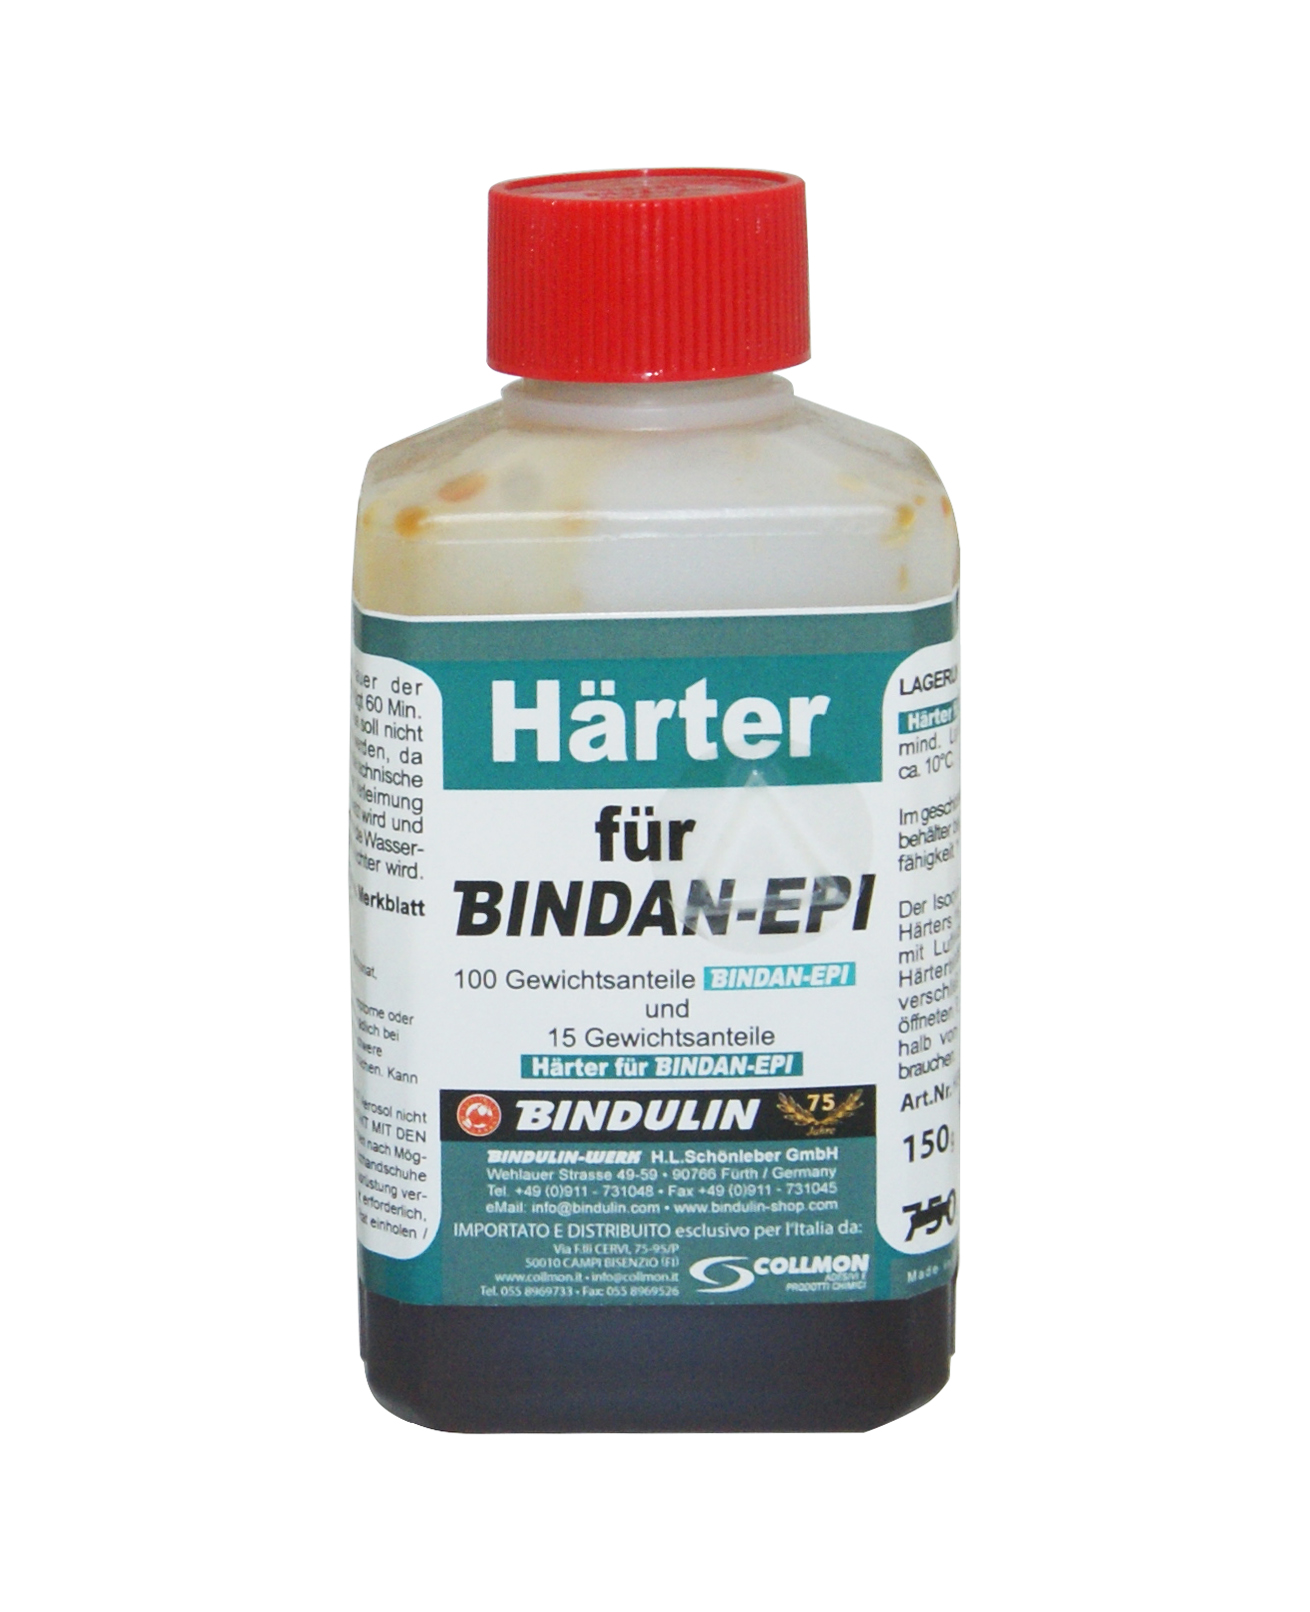 Bindulin - bindan epi catalizzatore 150 g